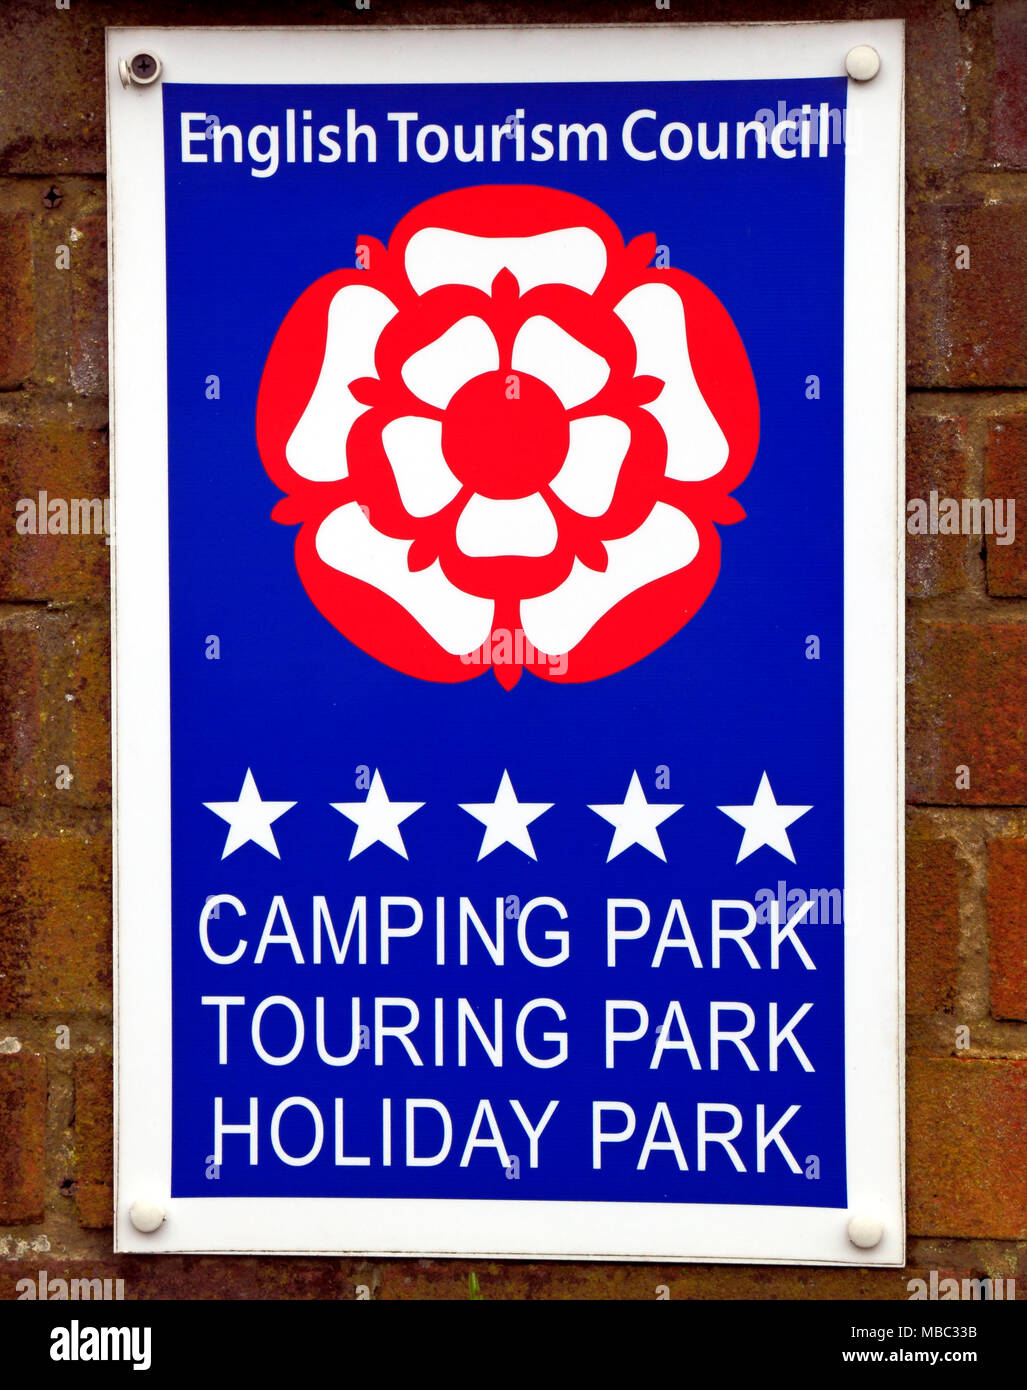 Le Conseil du tourisme anglais, 5 star award, logo, signe, Searles Holiday Park, Hunstanton, Norfolk, UK Banque D'Images